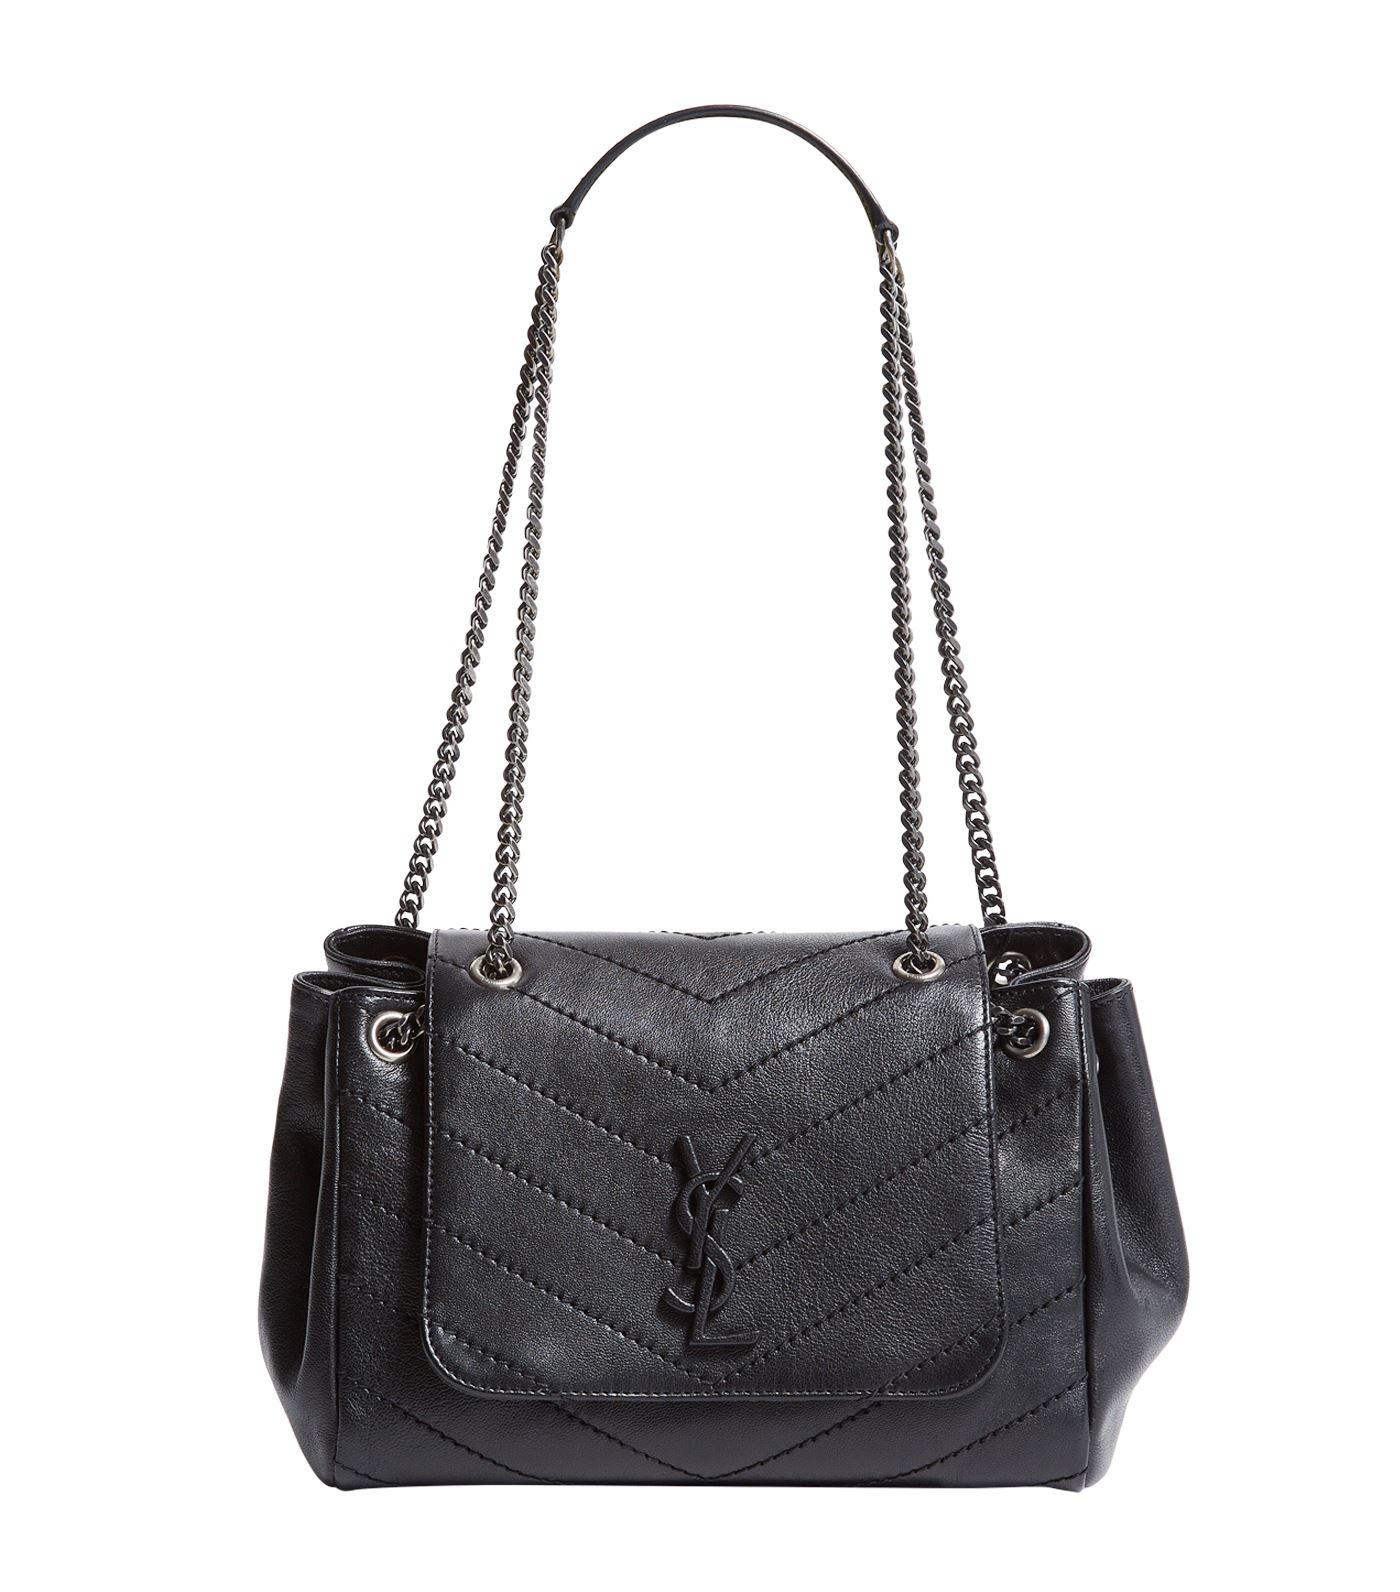 Saint Laurent Small Leather Nolita Shoulder Bag in Black - Save 1% - Lyst